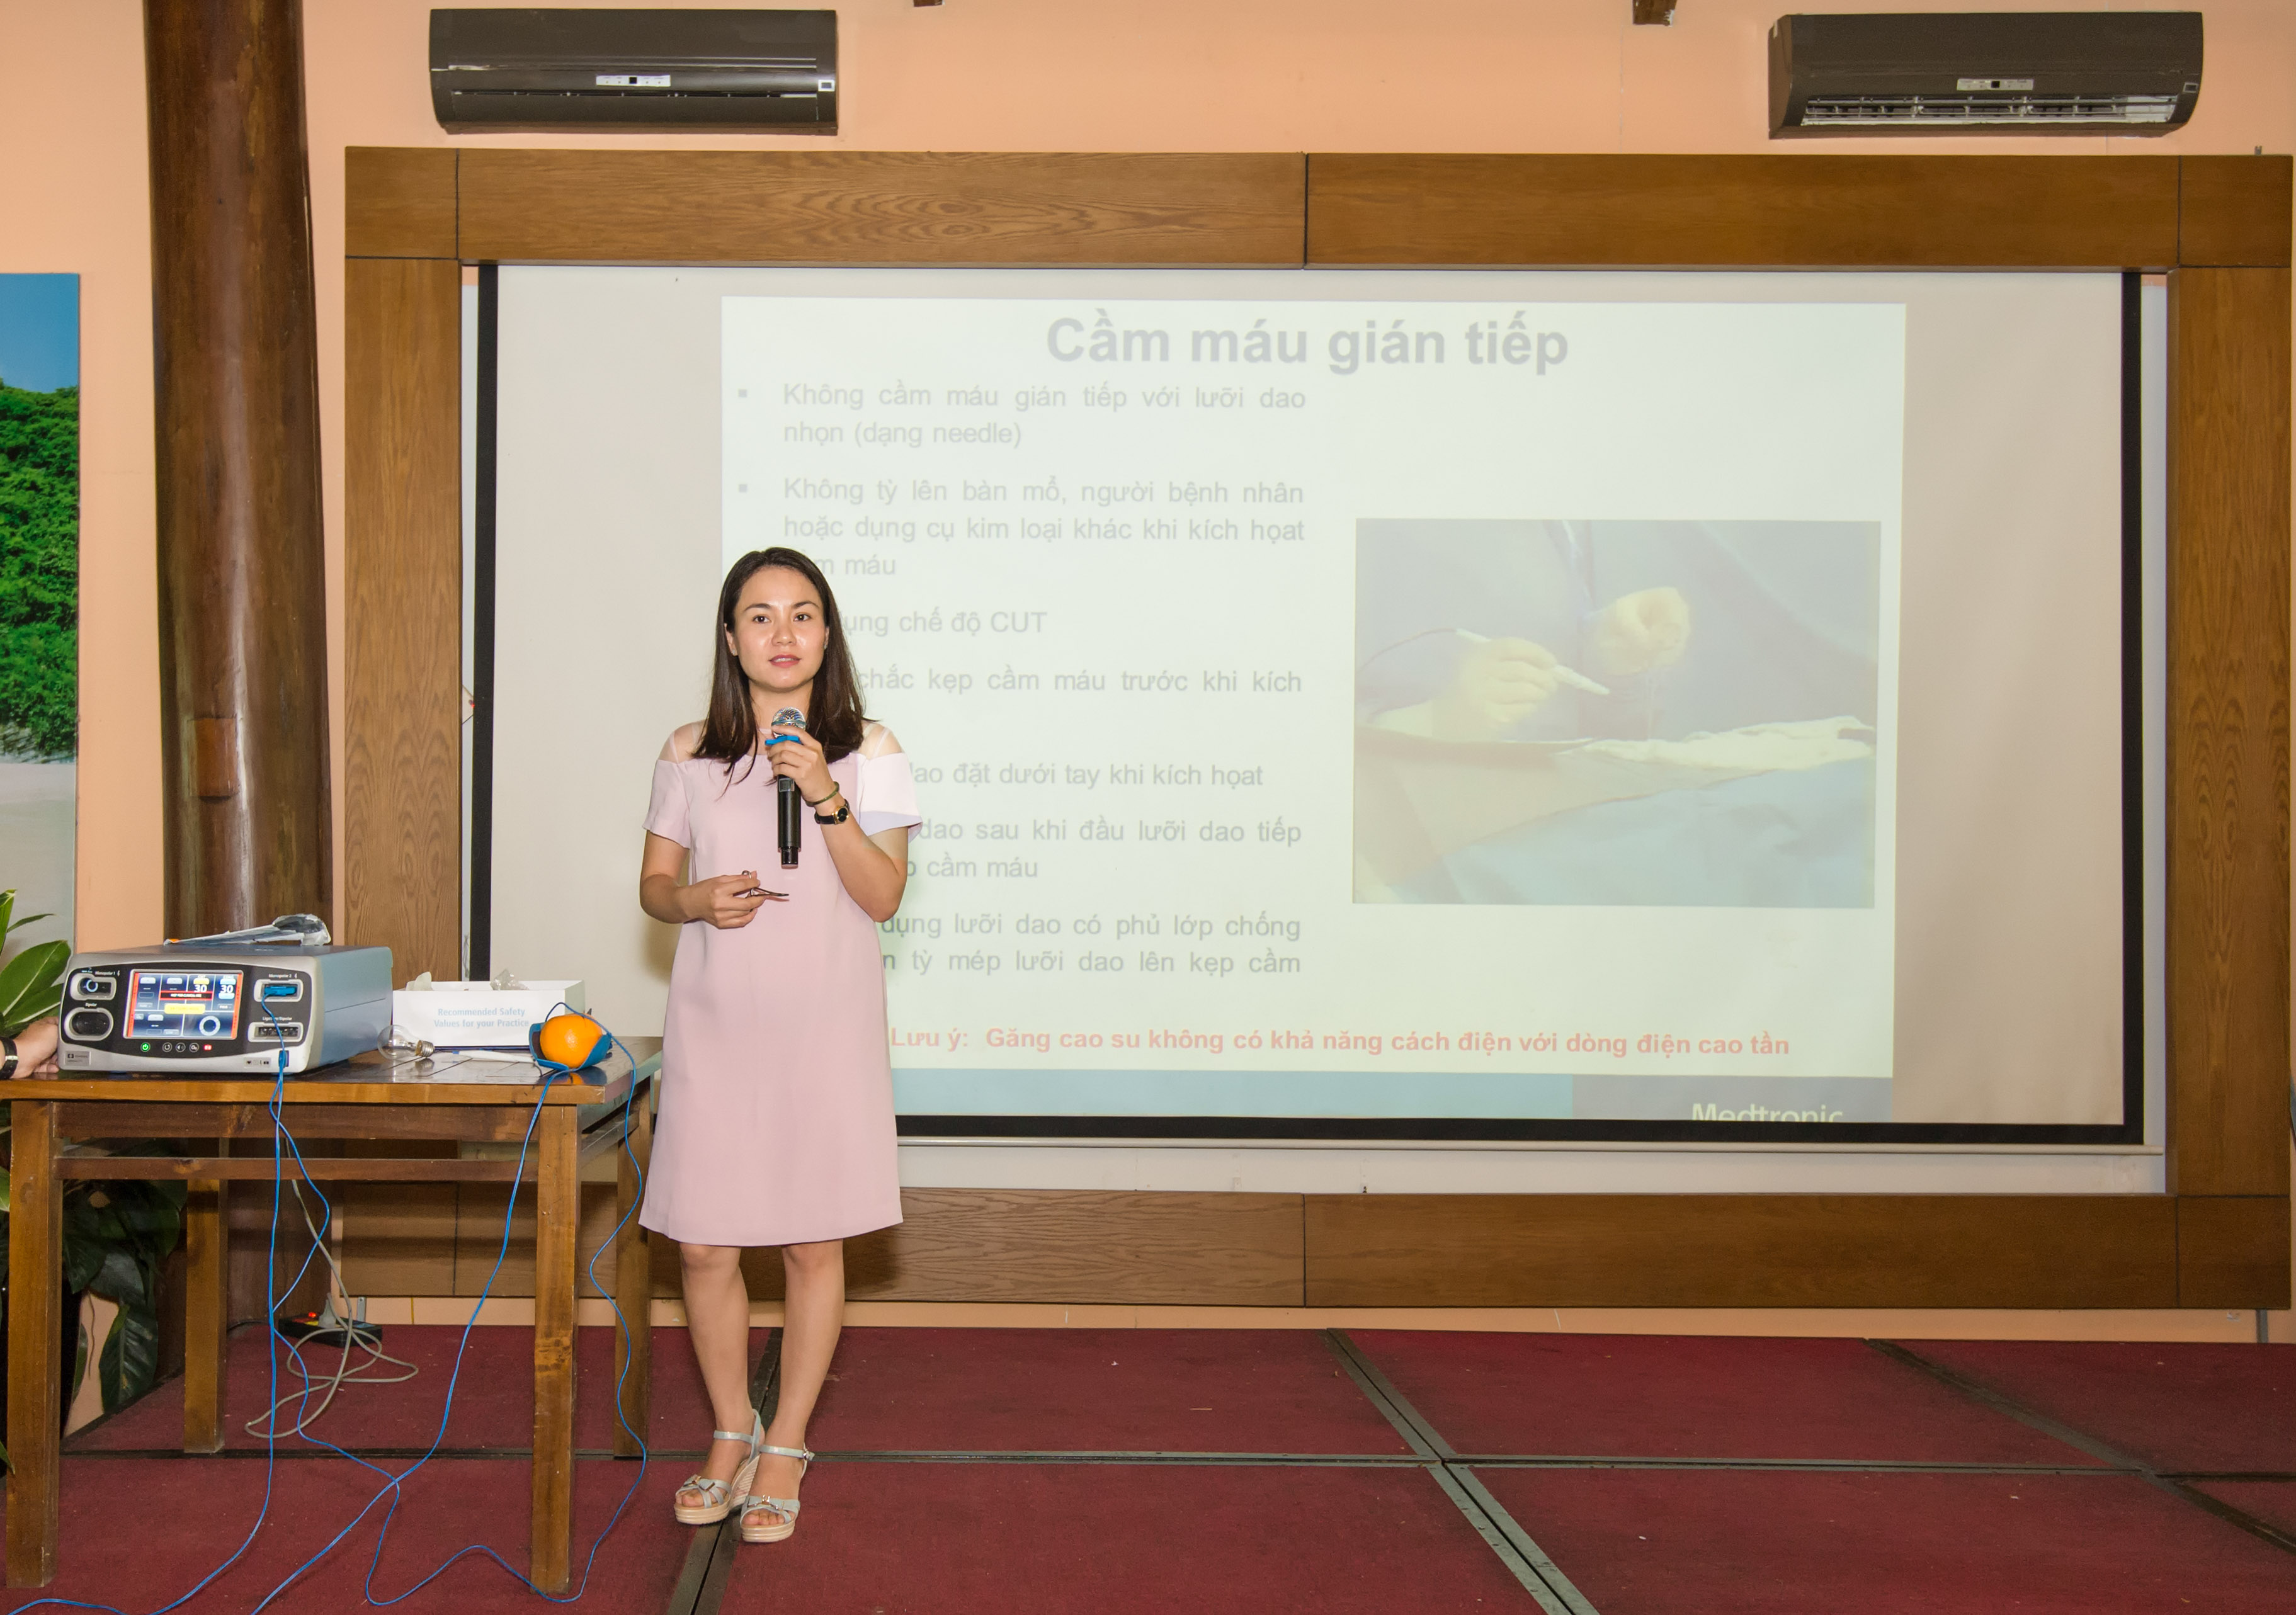 vietmedical provides training for nearly 100 nurses in hanoi